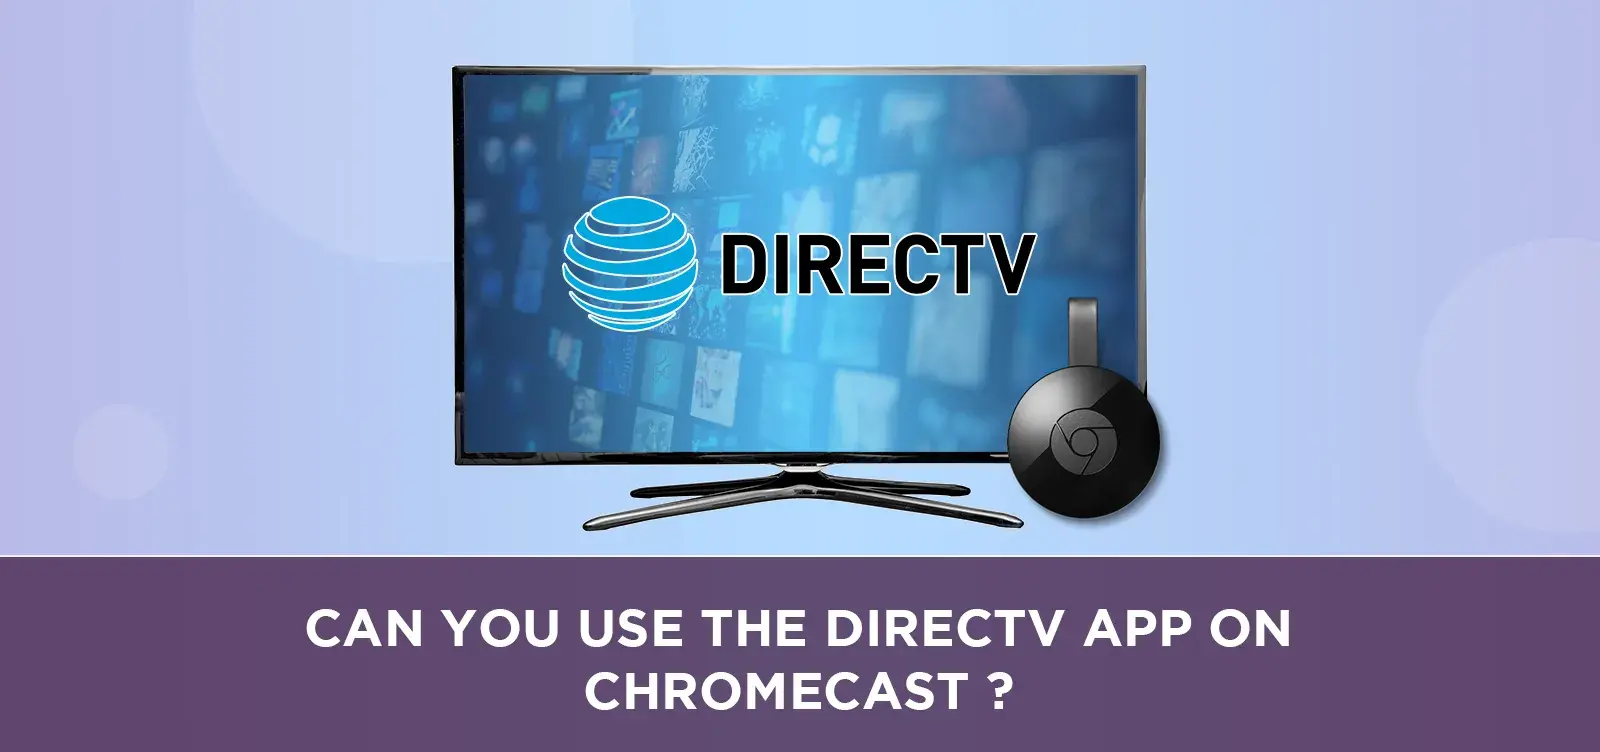 Can you use the DirecTV app on Chromecast?